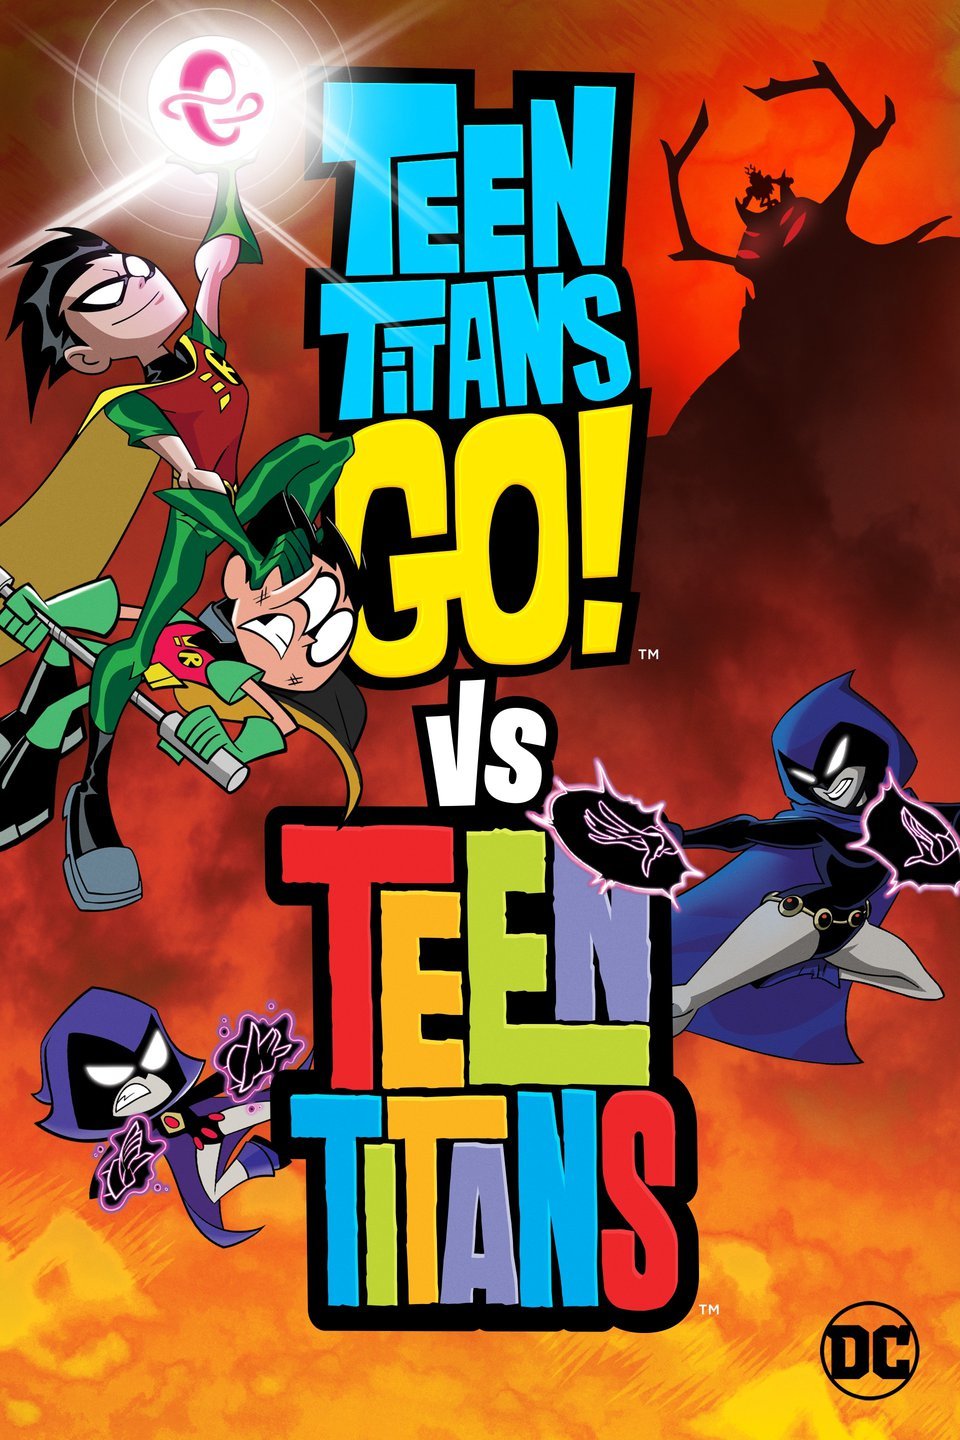 Teen Titans Go vs Teen Titans 2019 Tamil Dubbed Animation Movie Online